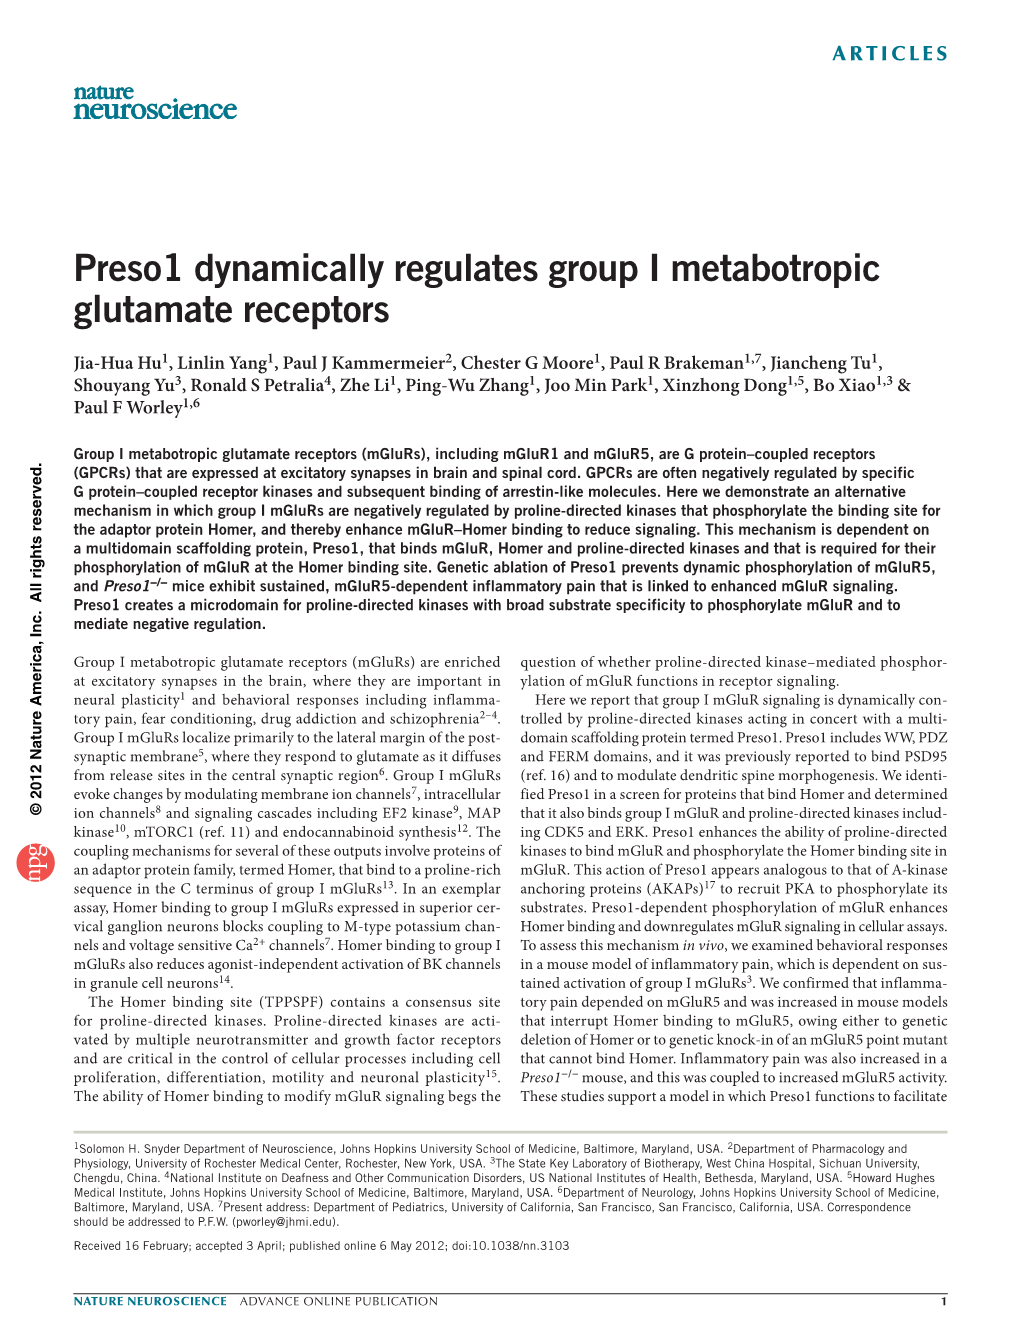 Preso1 Dynamically Regulates Group I Metabotropic Glutamate Receptors